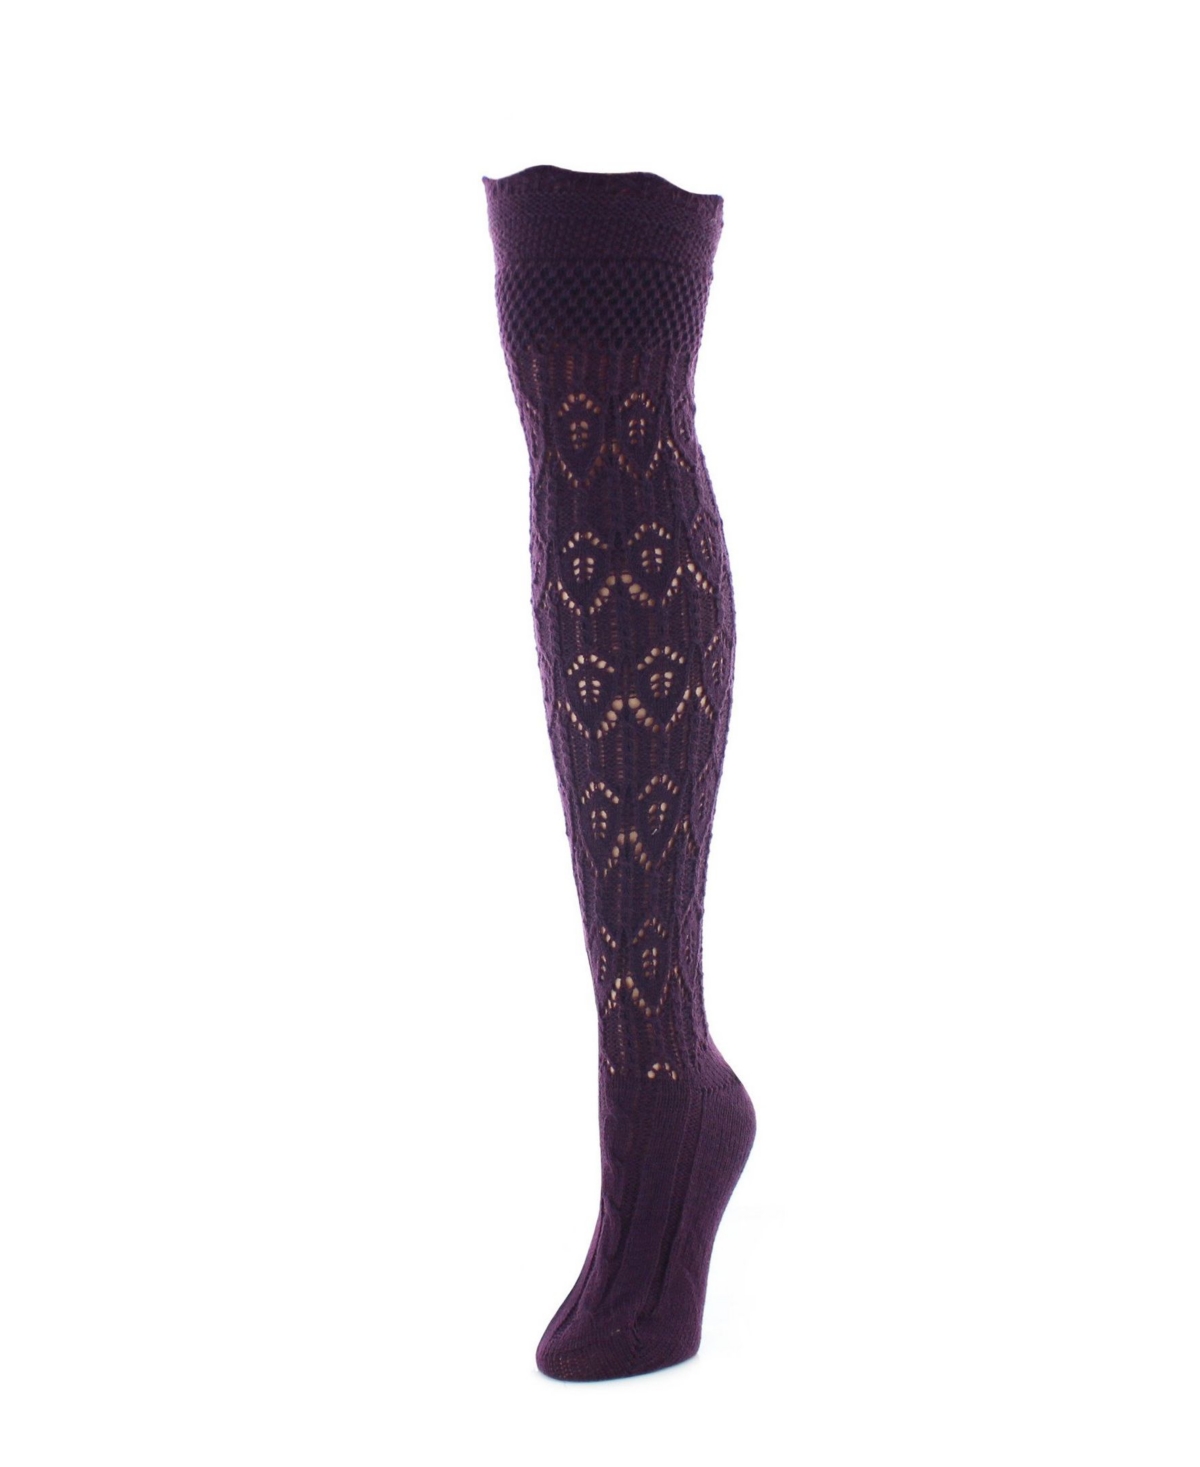 Women's Diamond Pointelle Chunky Knit Over-The-Knee Warm Socks - Eggplant